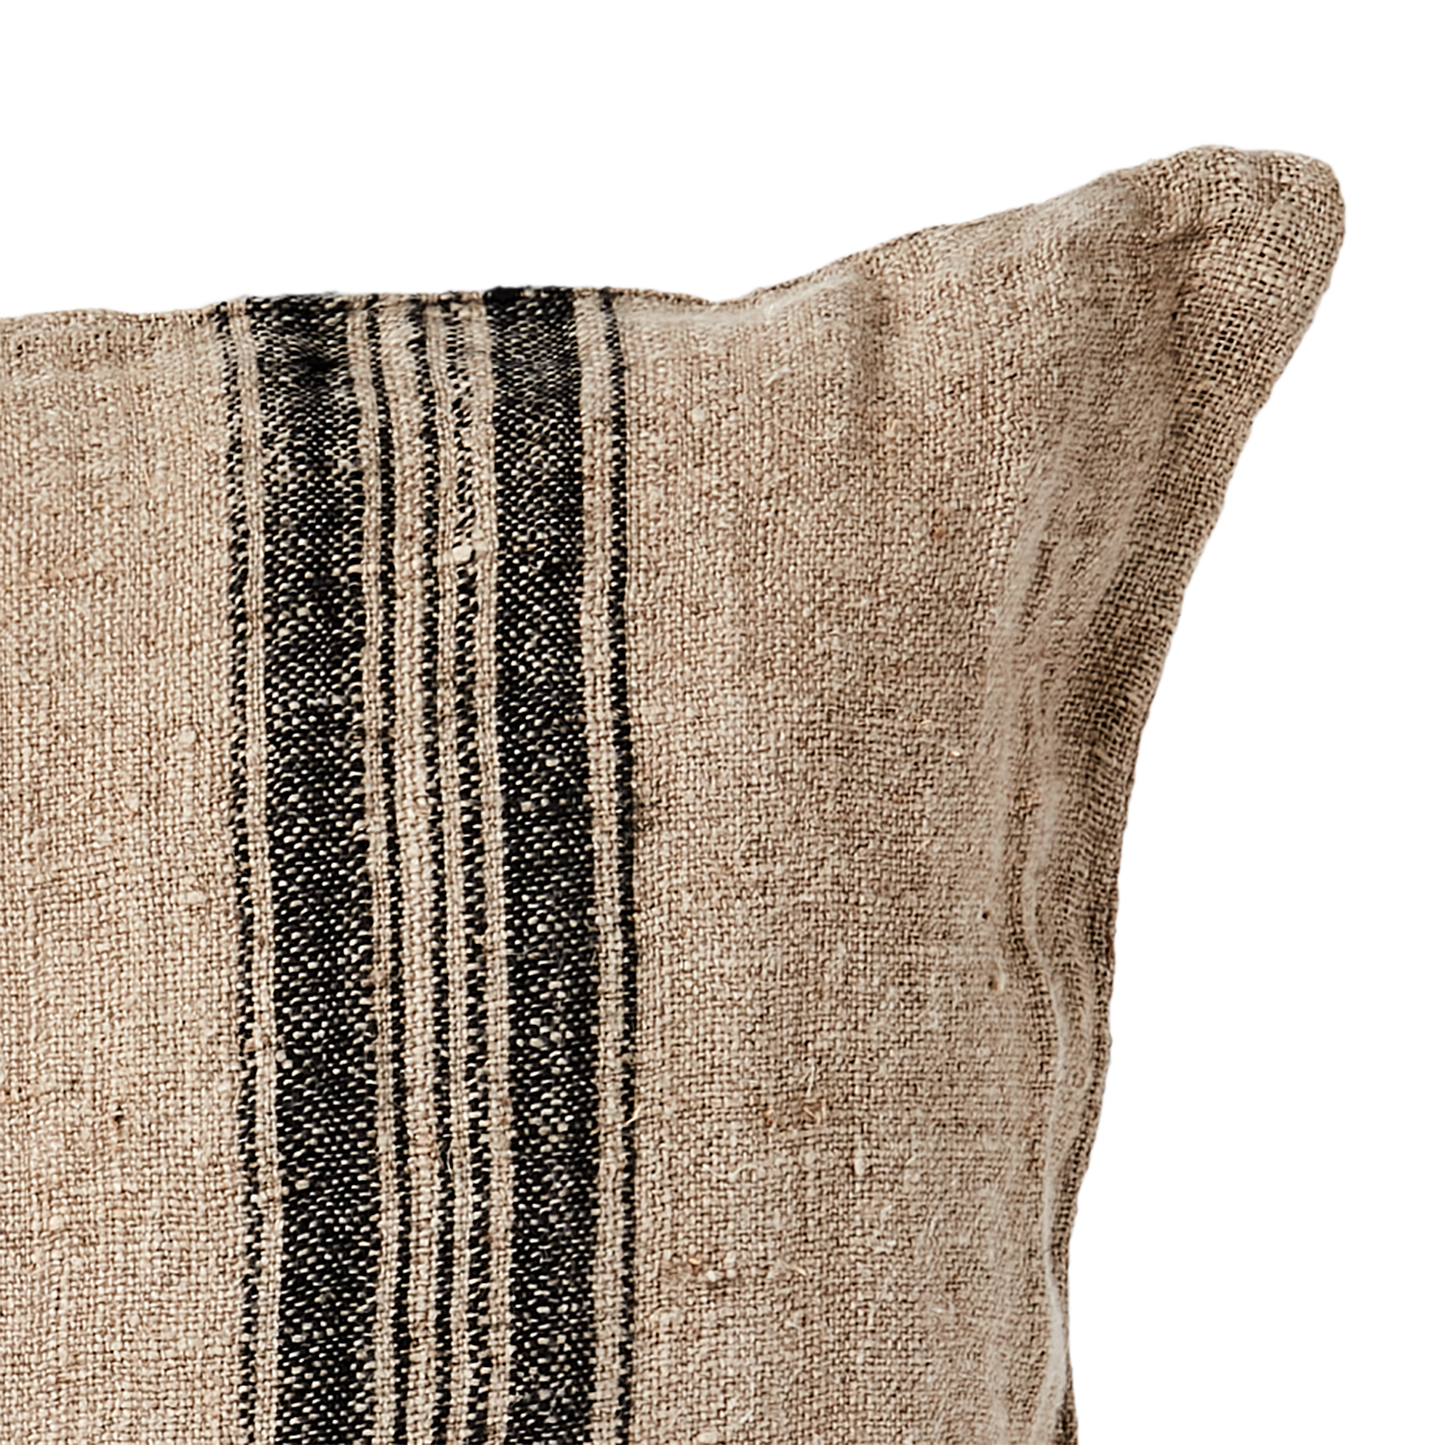 Natural Linen Cushion Cover - 50 x 50